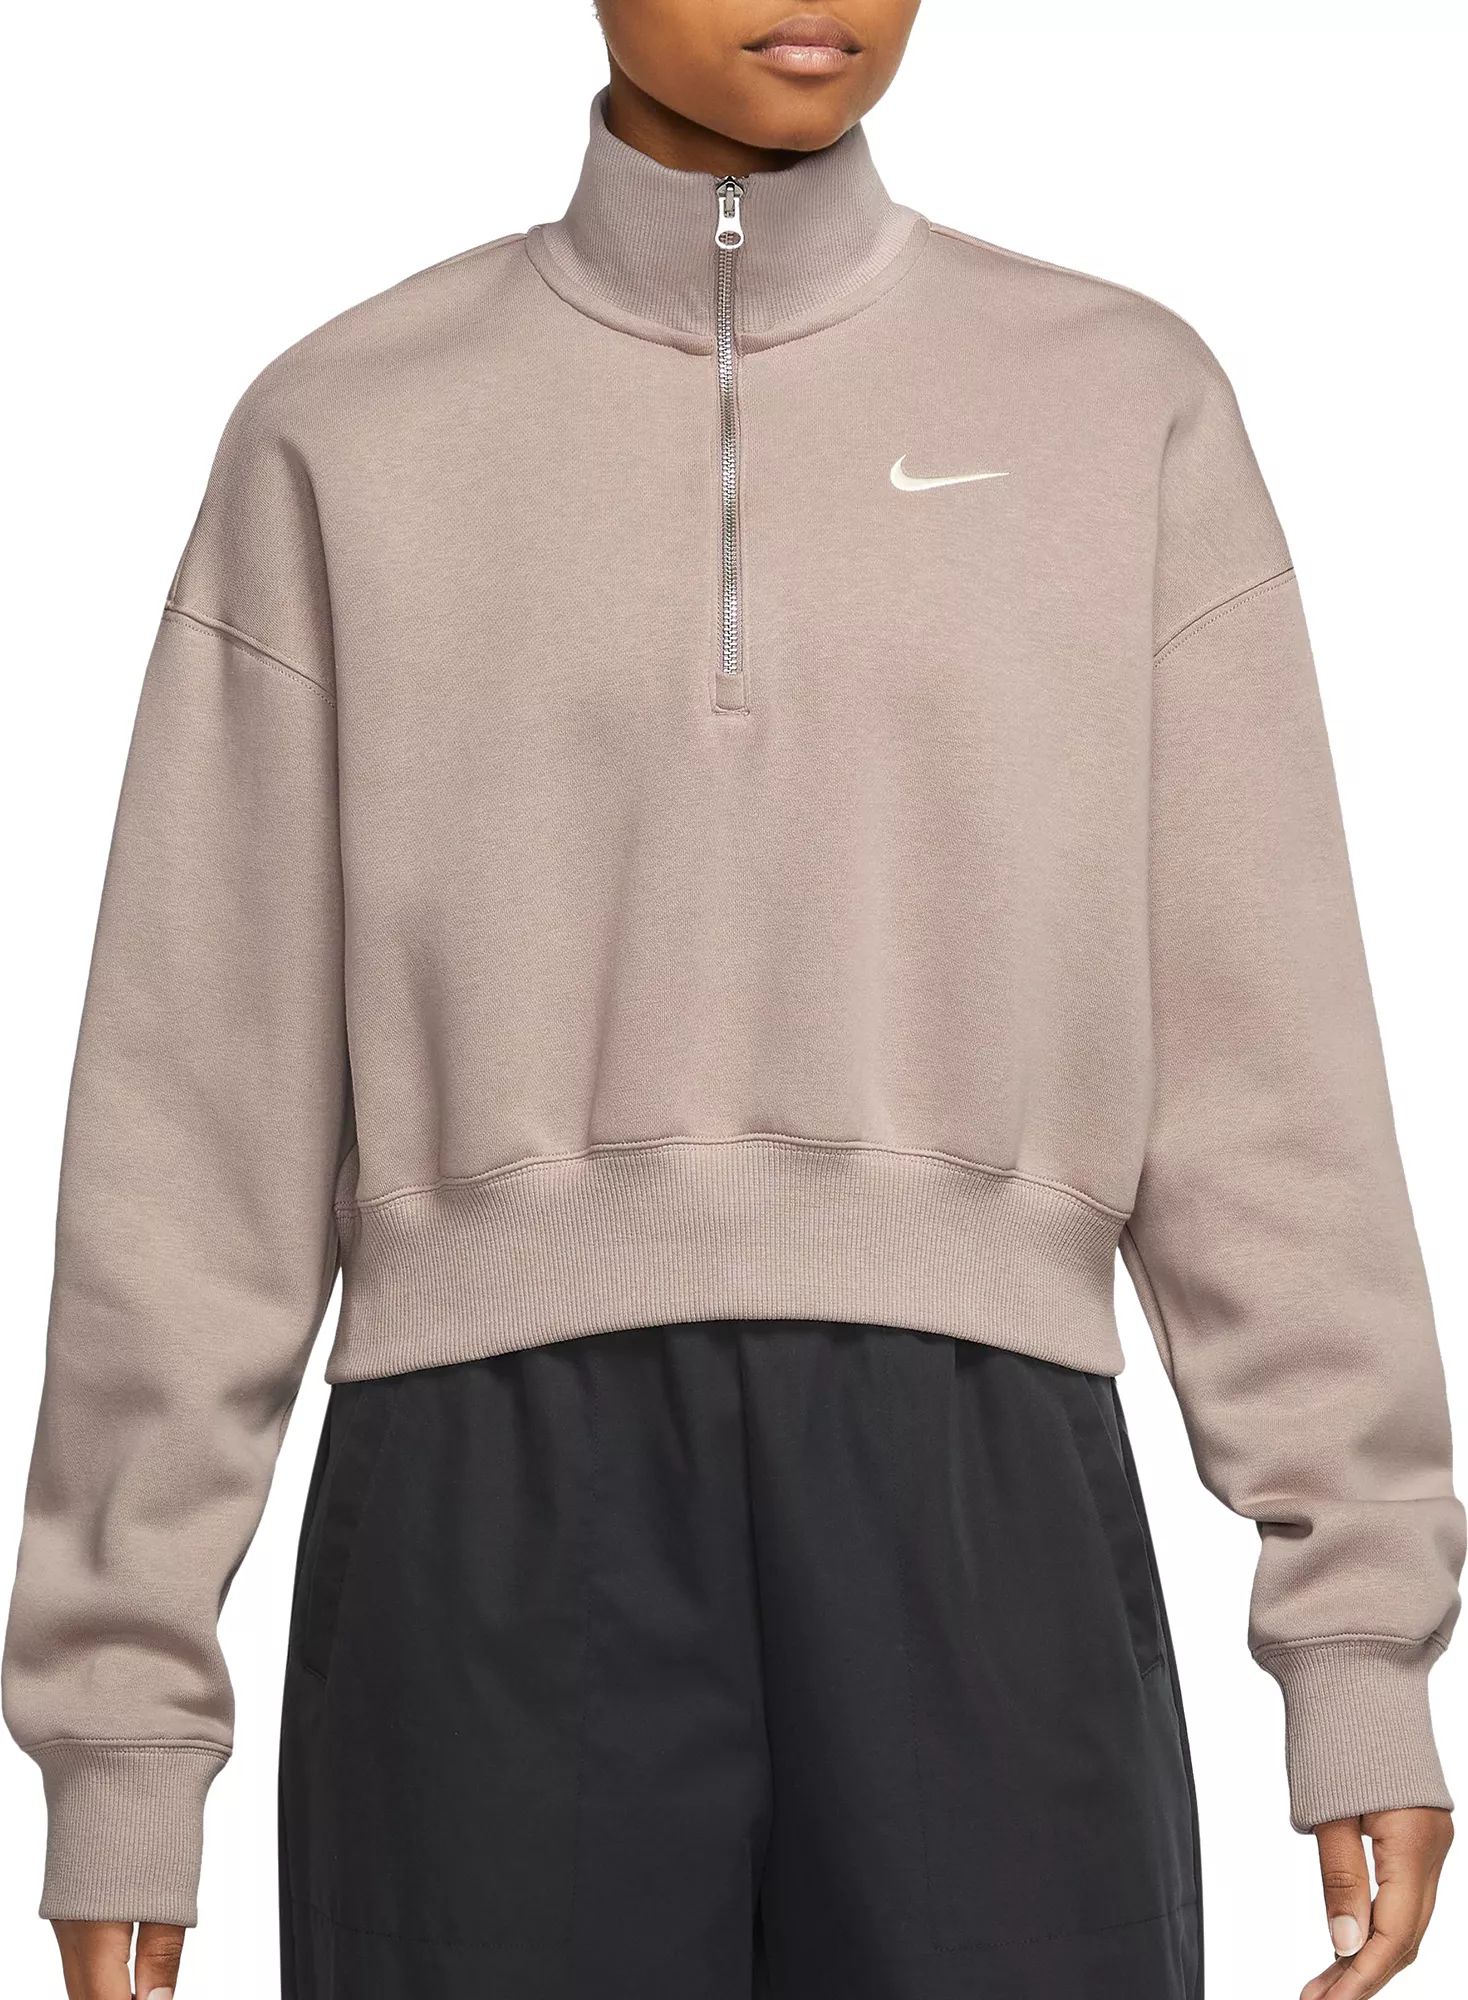 Nike Women's Sportswear Phoenix 1/4 Zip Fleece Pullover, Medium, Diffused Taupe | Dick's Sporting Goods